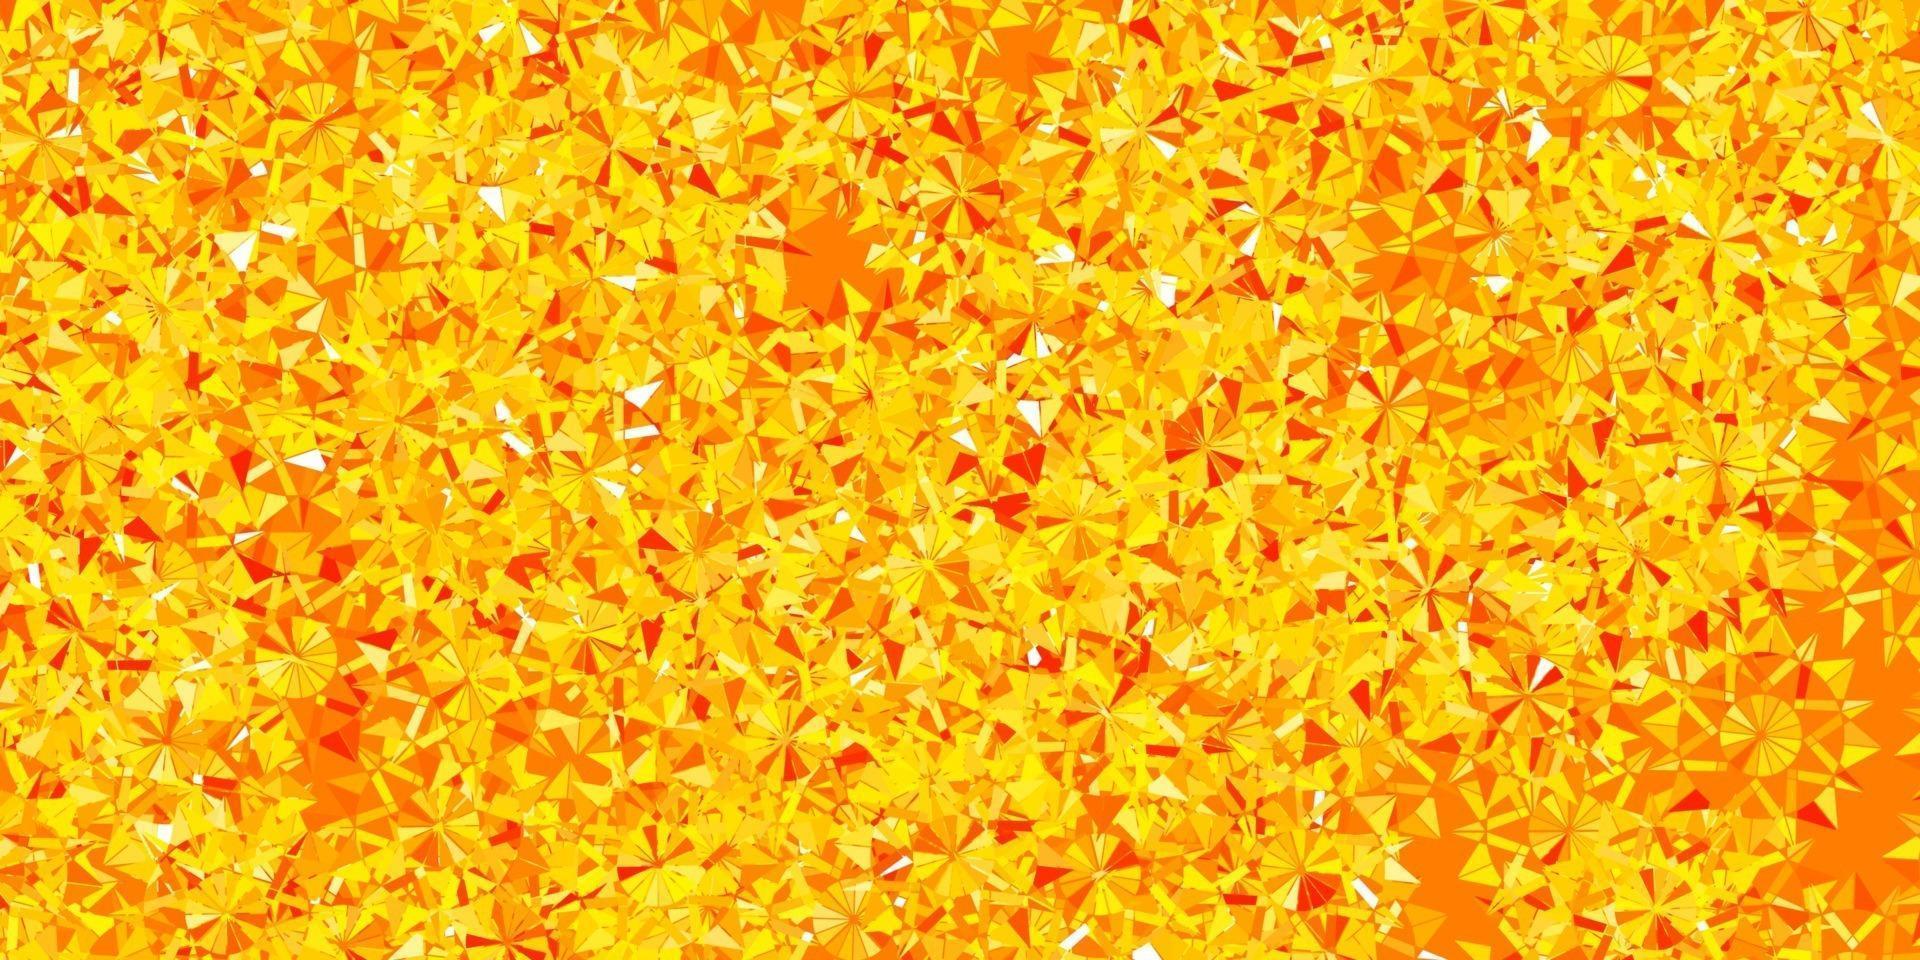 layout de vetor laranja claro com flocos de neve lindos.